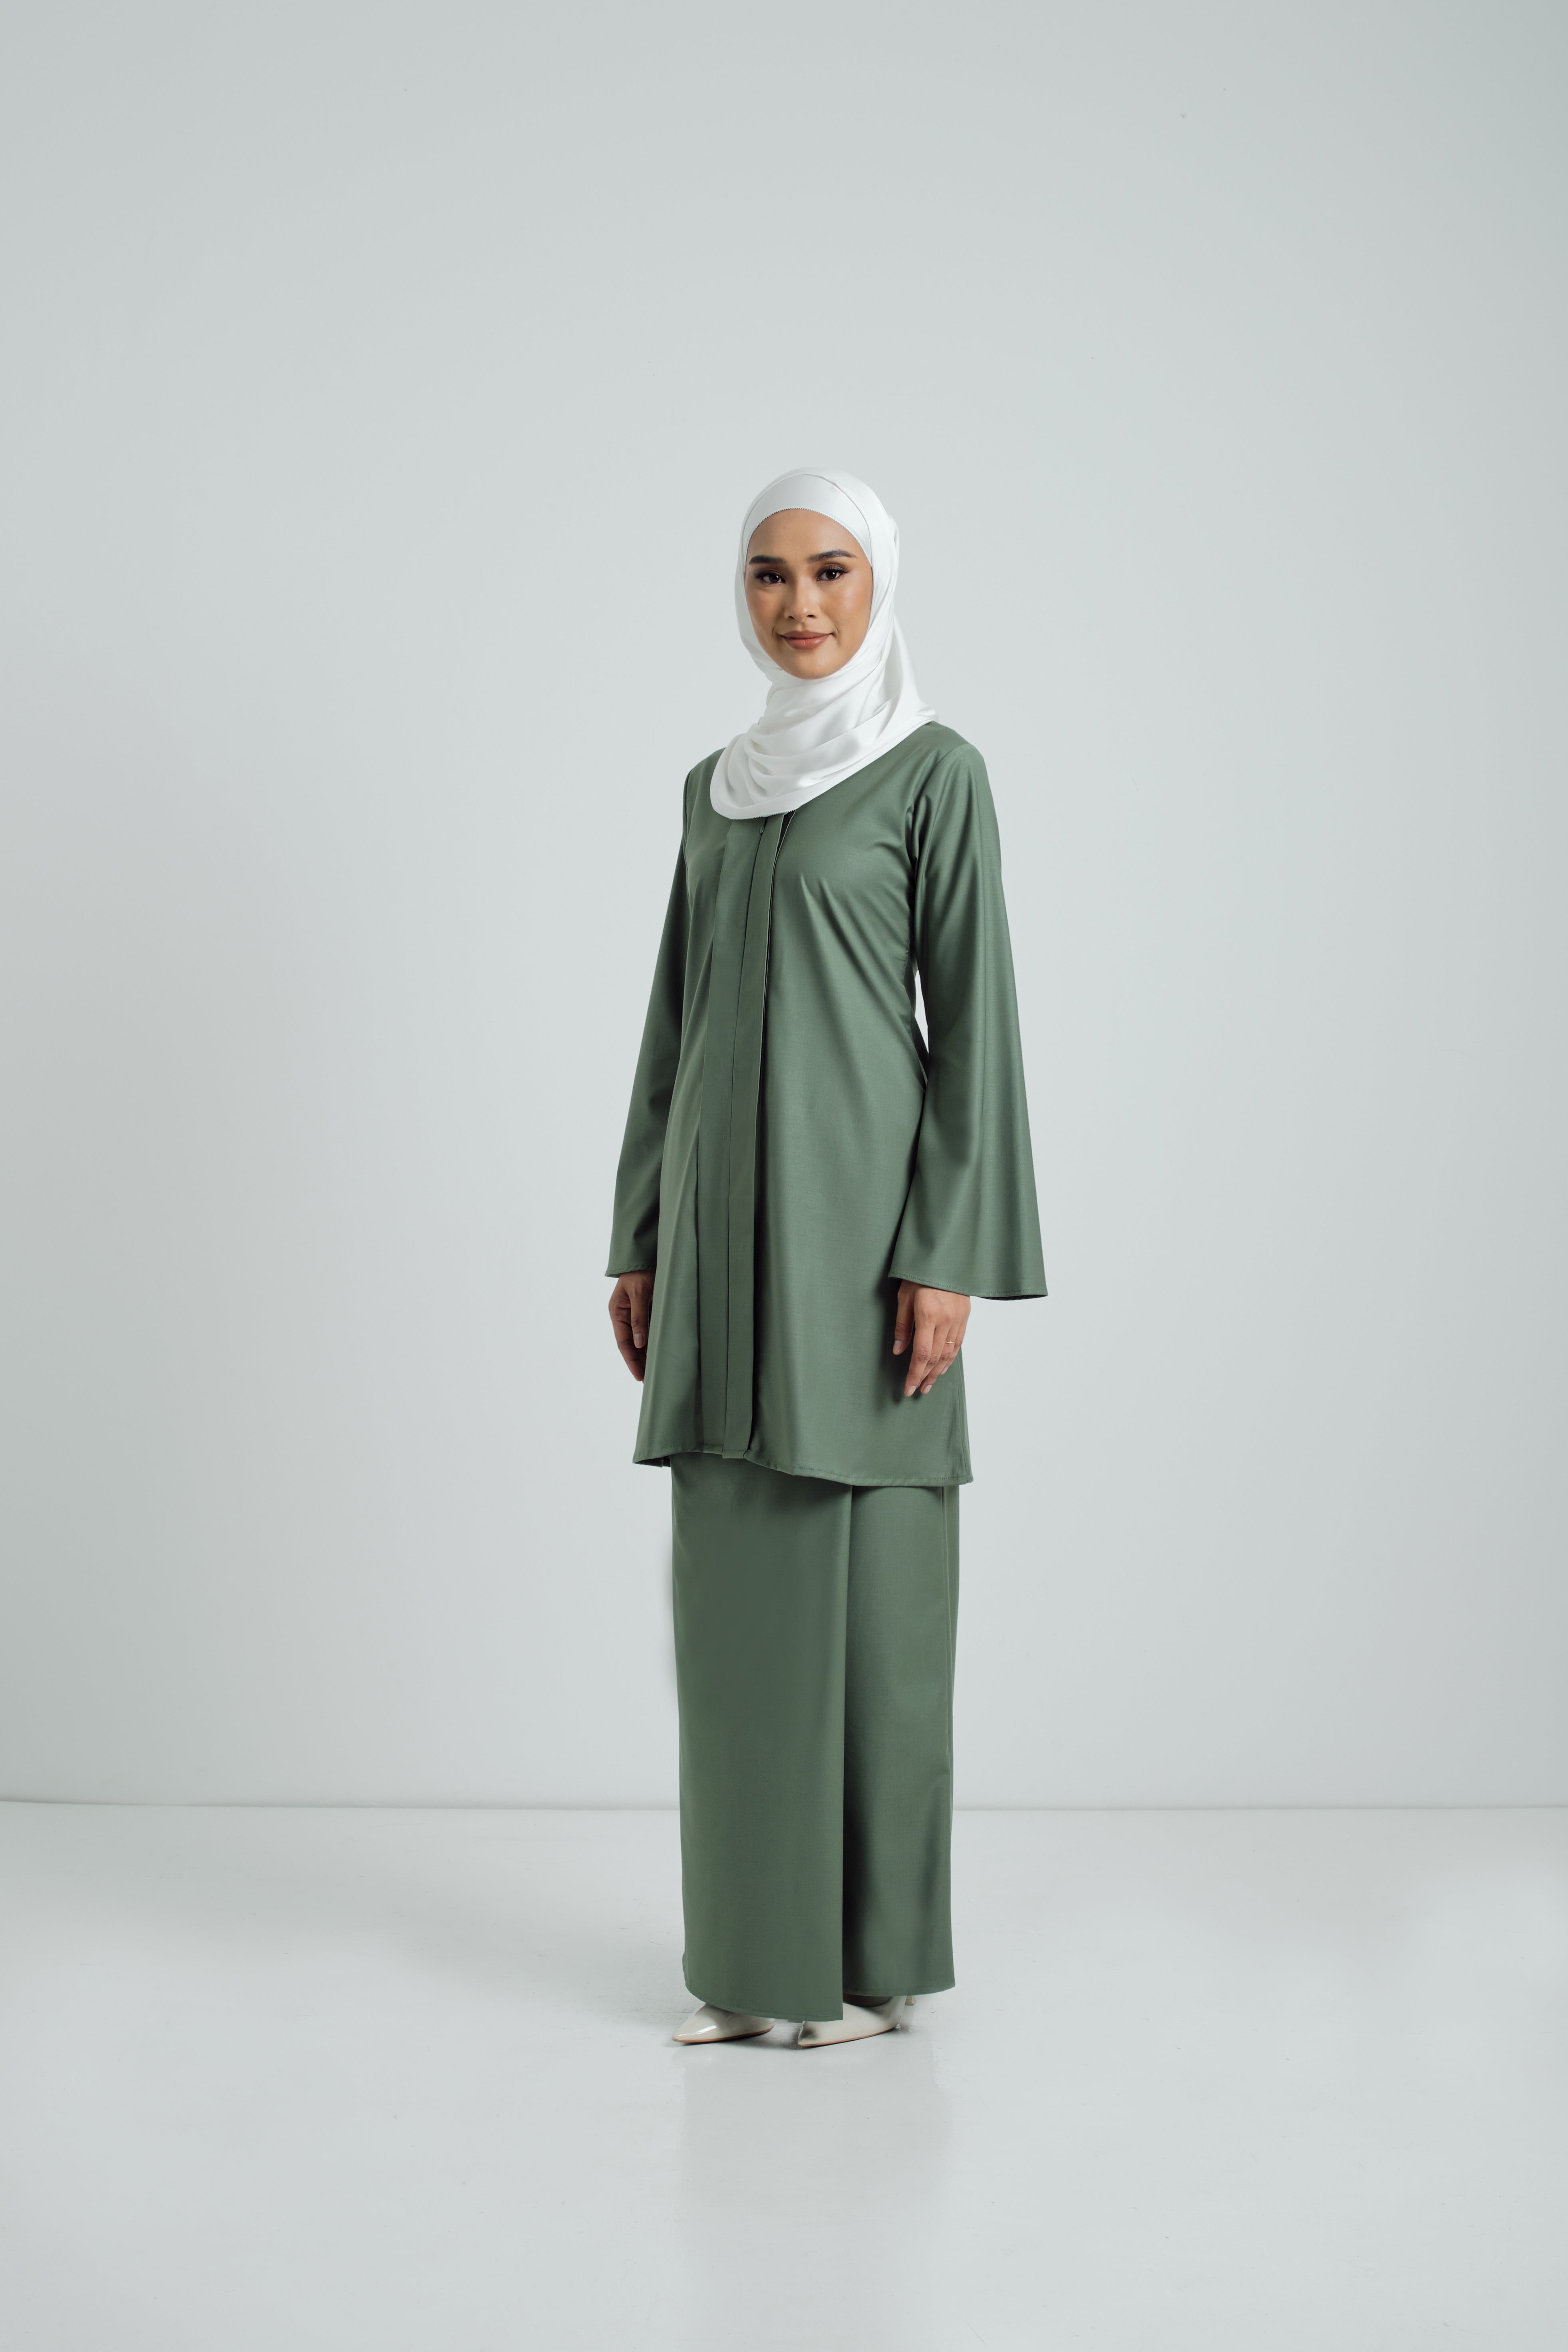 Patawali Baju Kebaya - Pickle Green